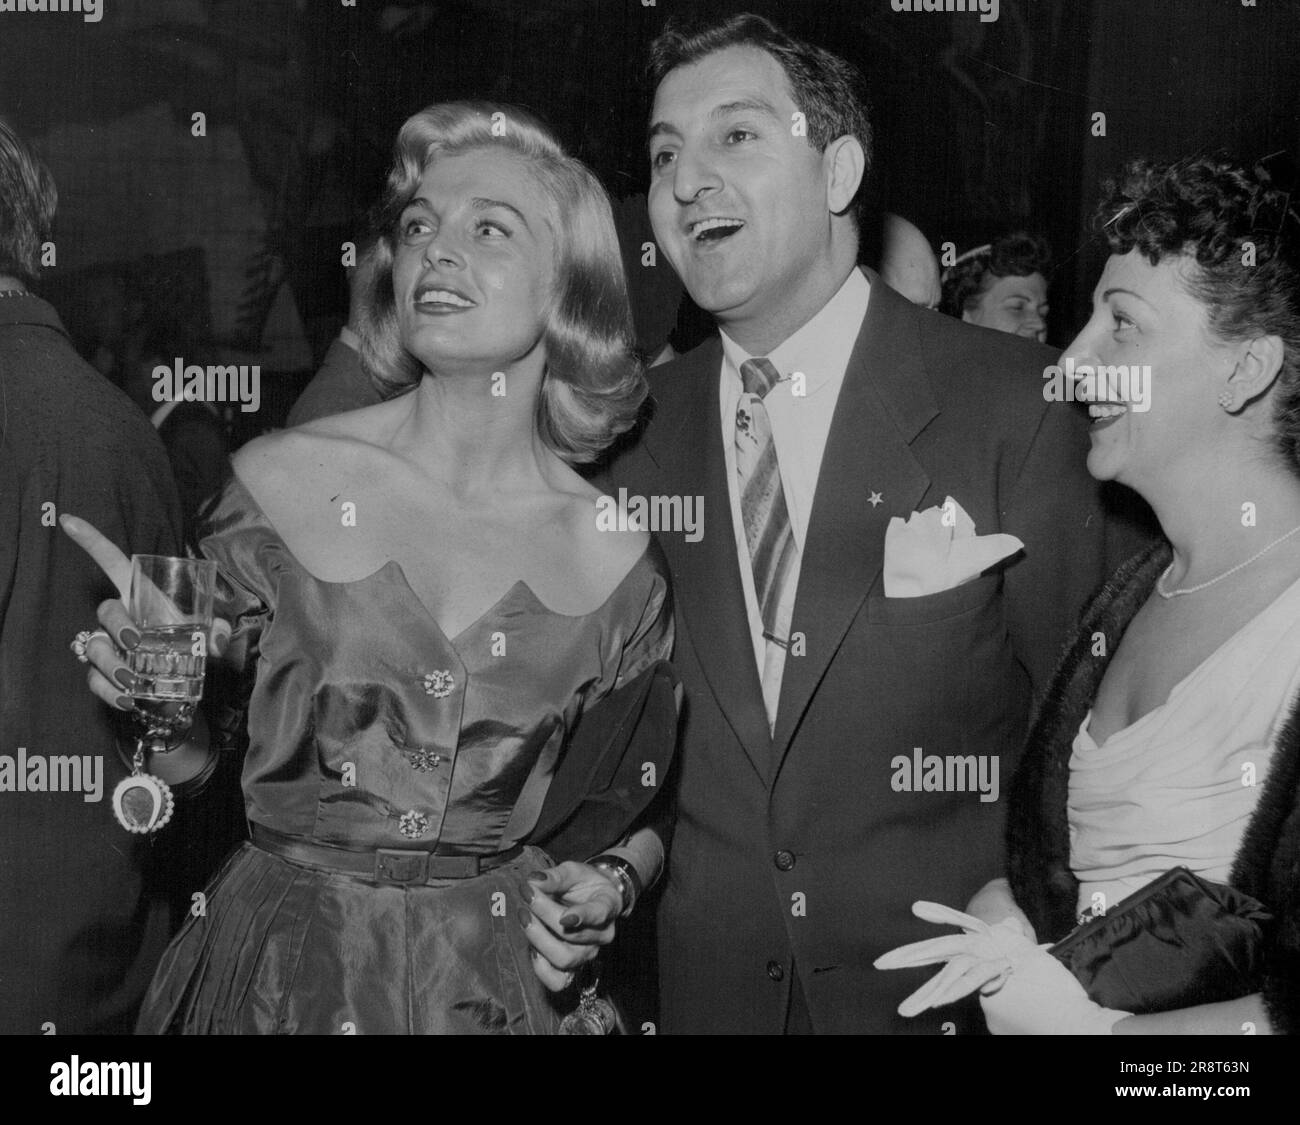 Liz Scott, Danny Thomas & Wife. September 24, 1952. Stock Photo